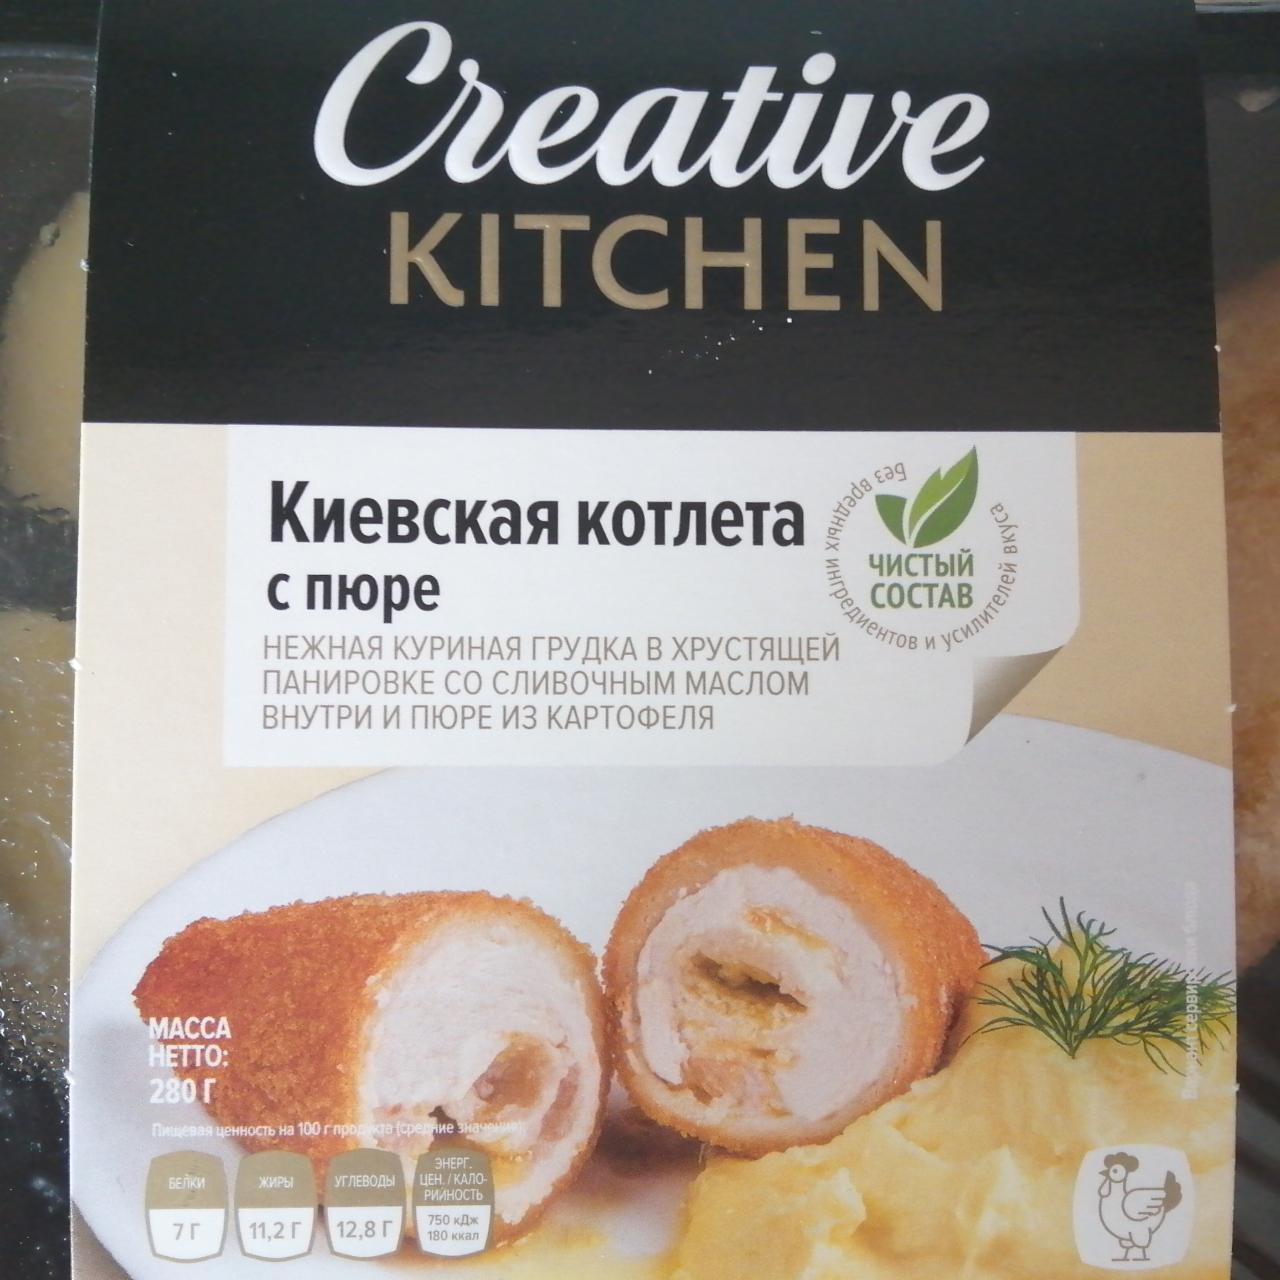 Фото - Киевская котлета с пюре Creative kitchen